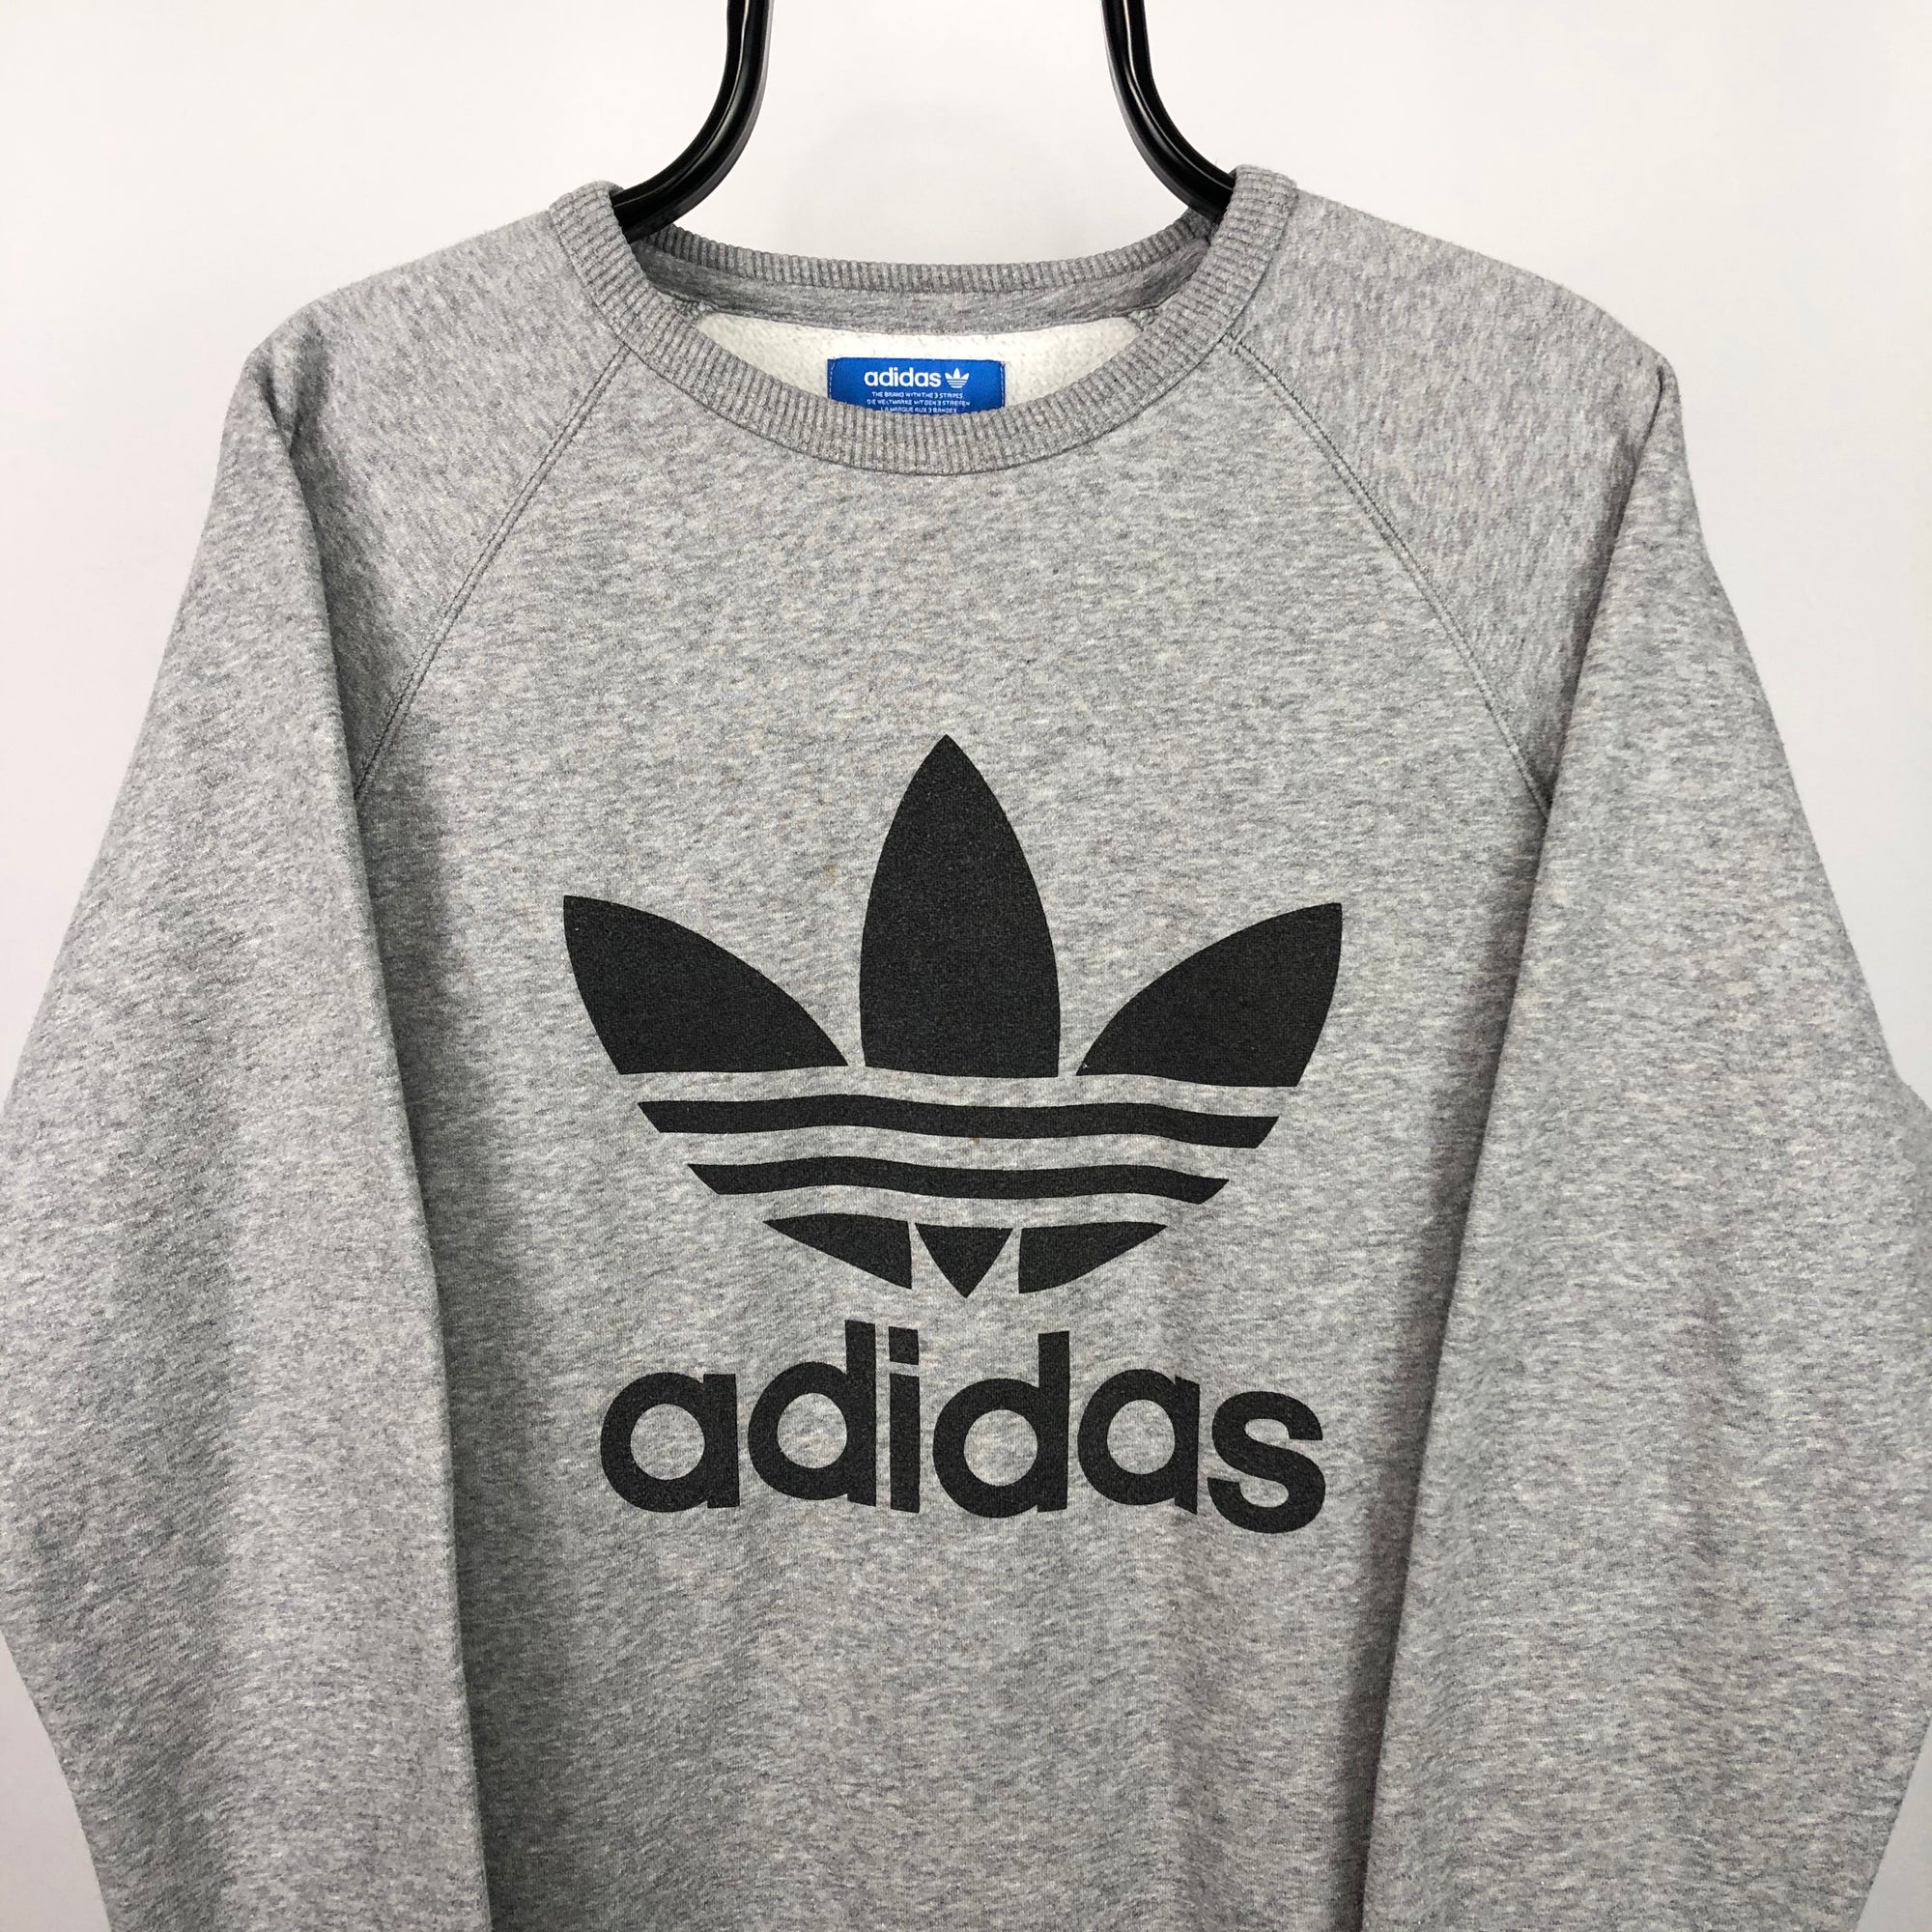 Adidas Spellout Sweatshirt in Grey/Black - Men's Small/Women's Medium